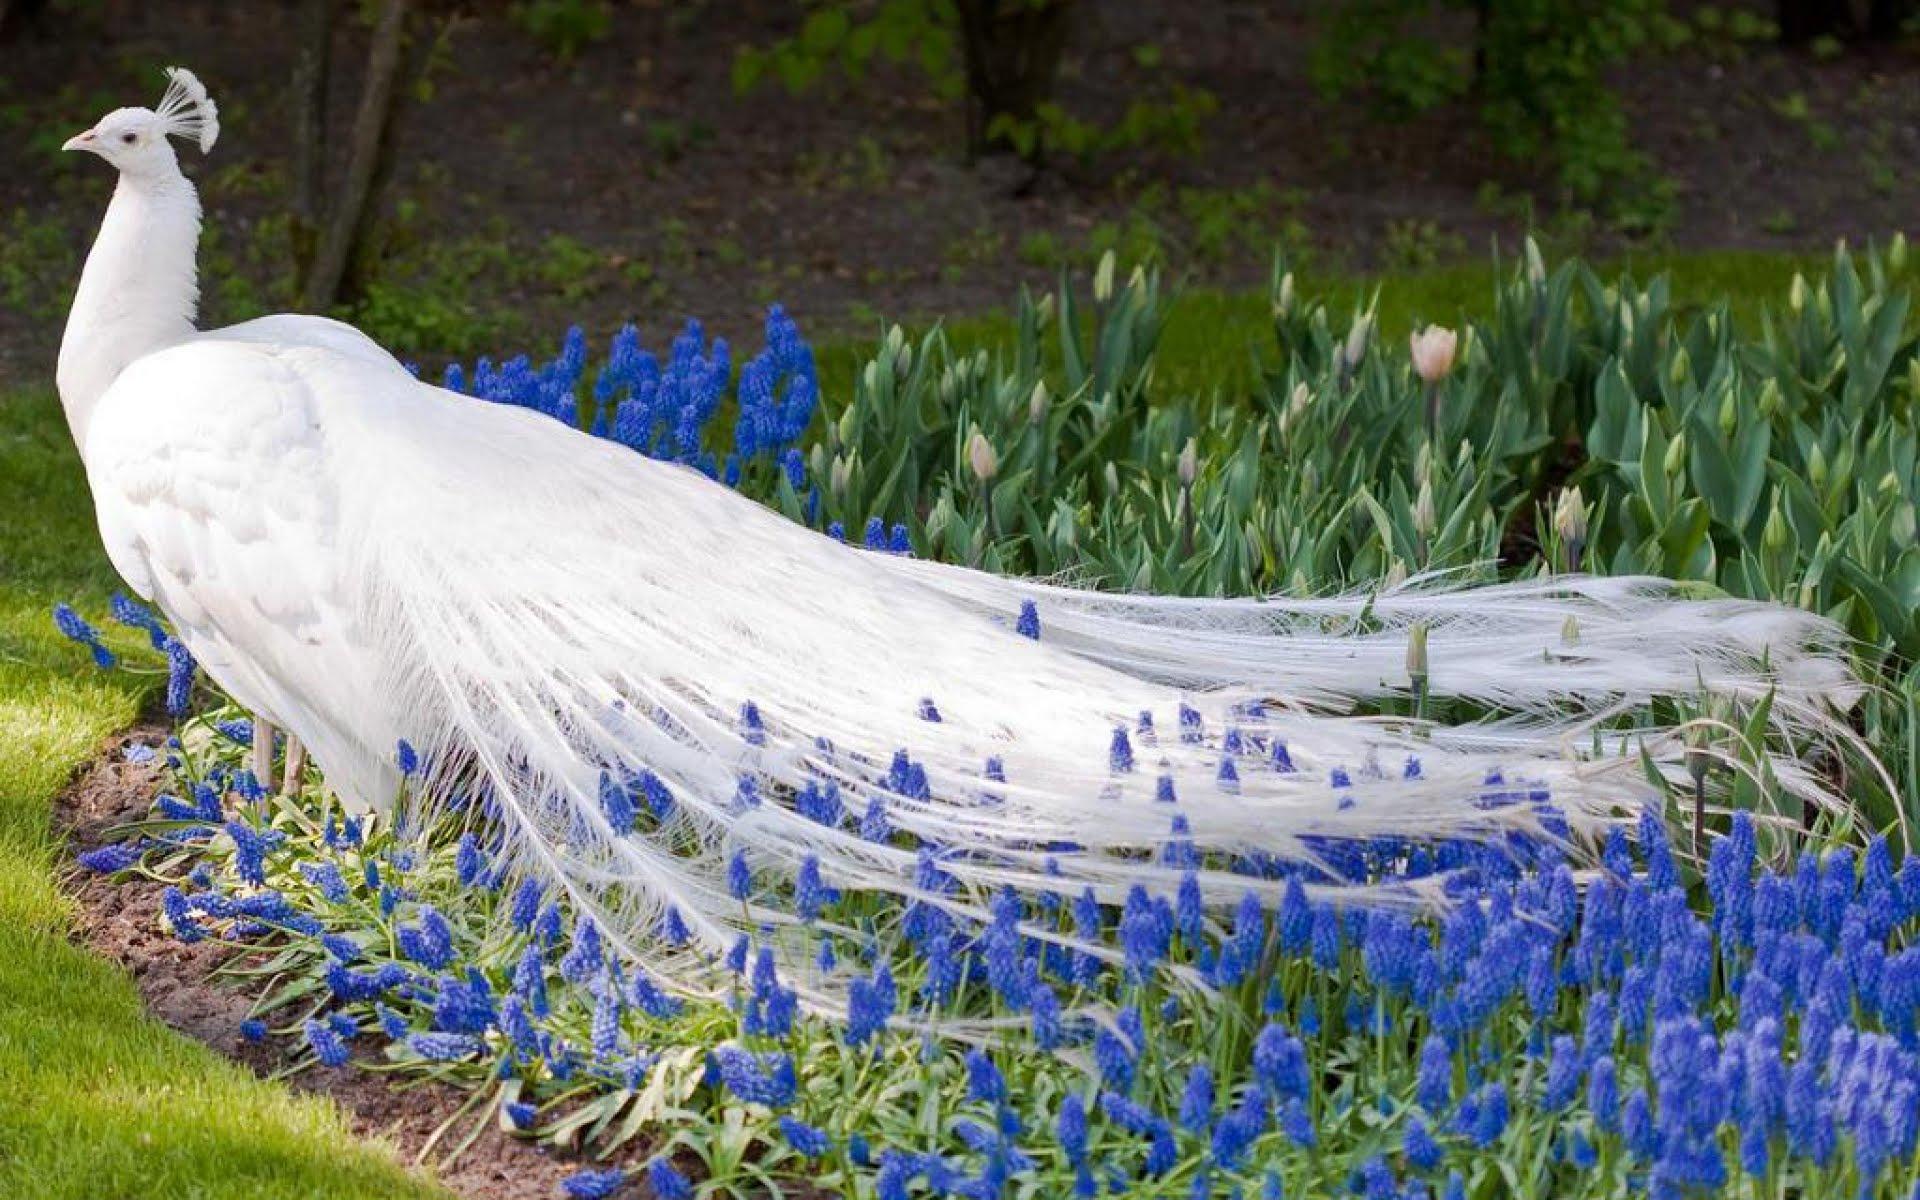 Very Beautiful and Amazing white peacock